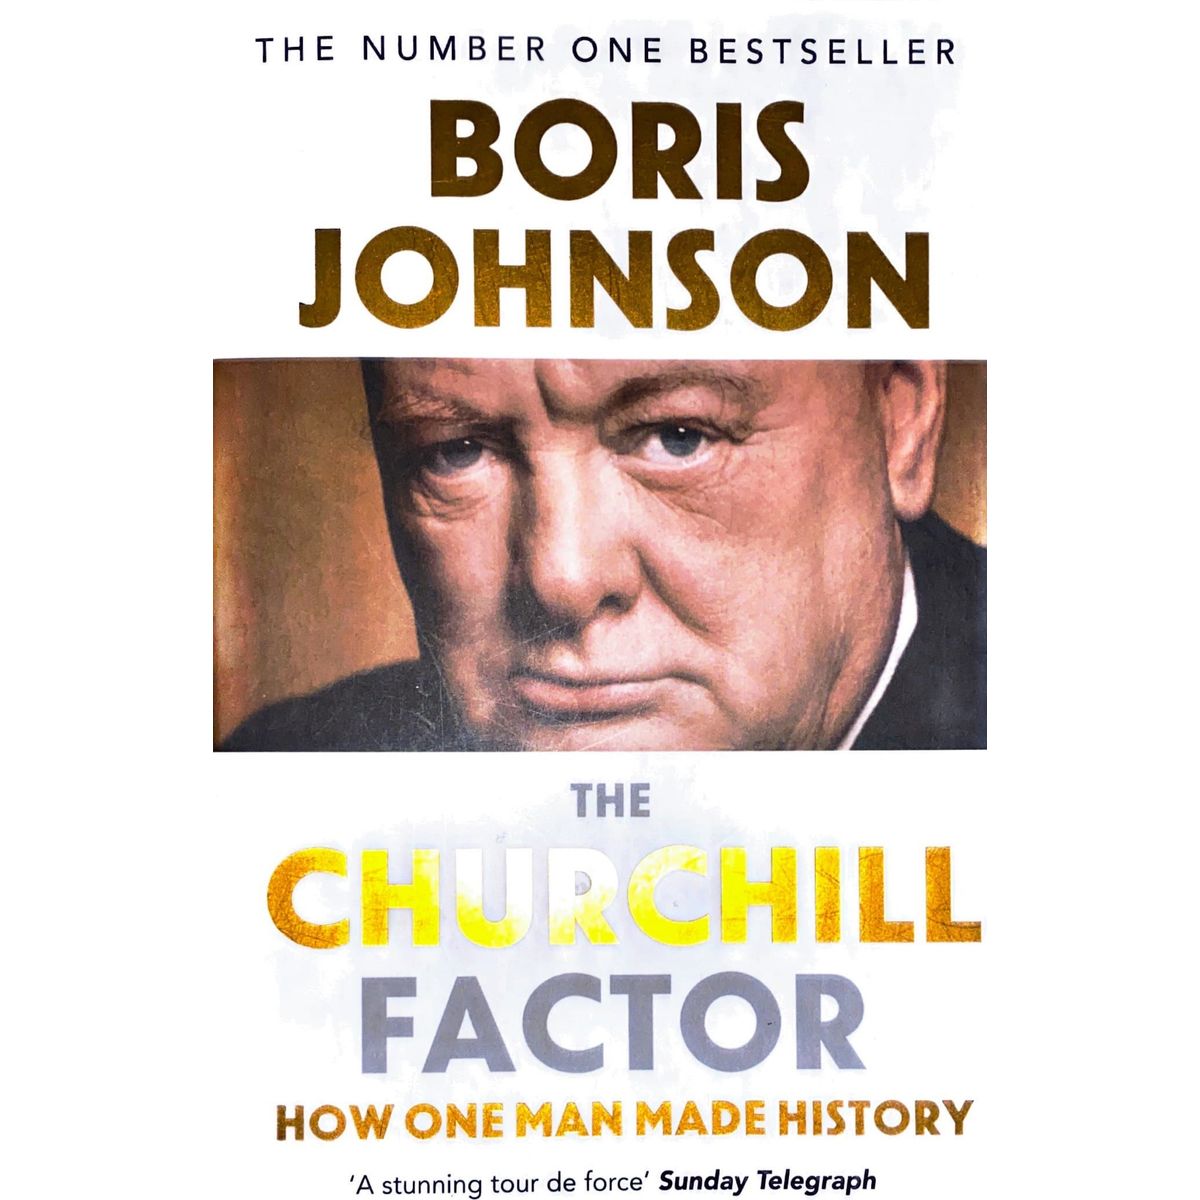 ISBN: 9781444783056 / 144478305X - The Churchill Factor by Boris Johnson [2015]